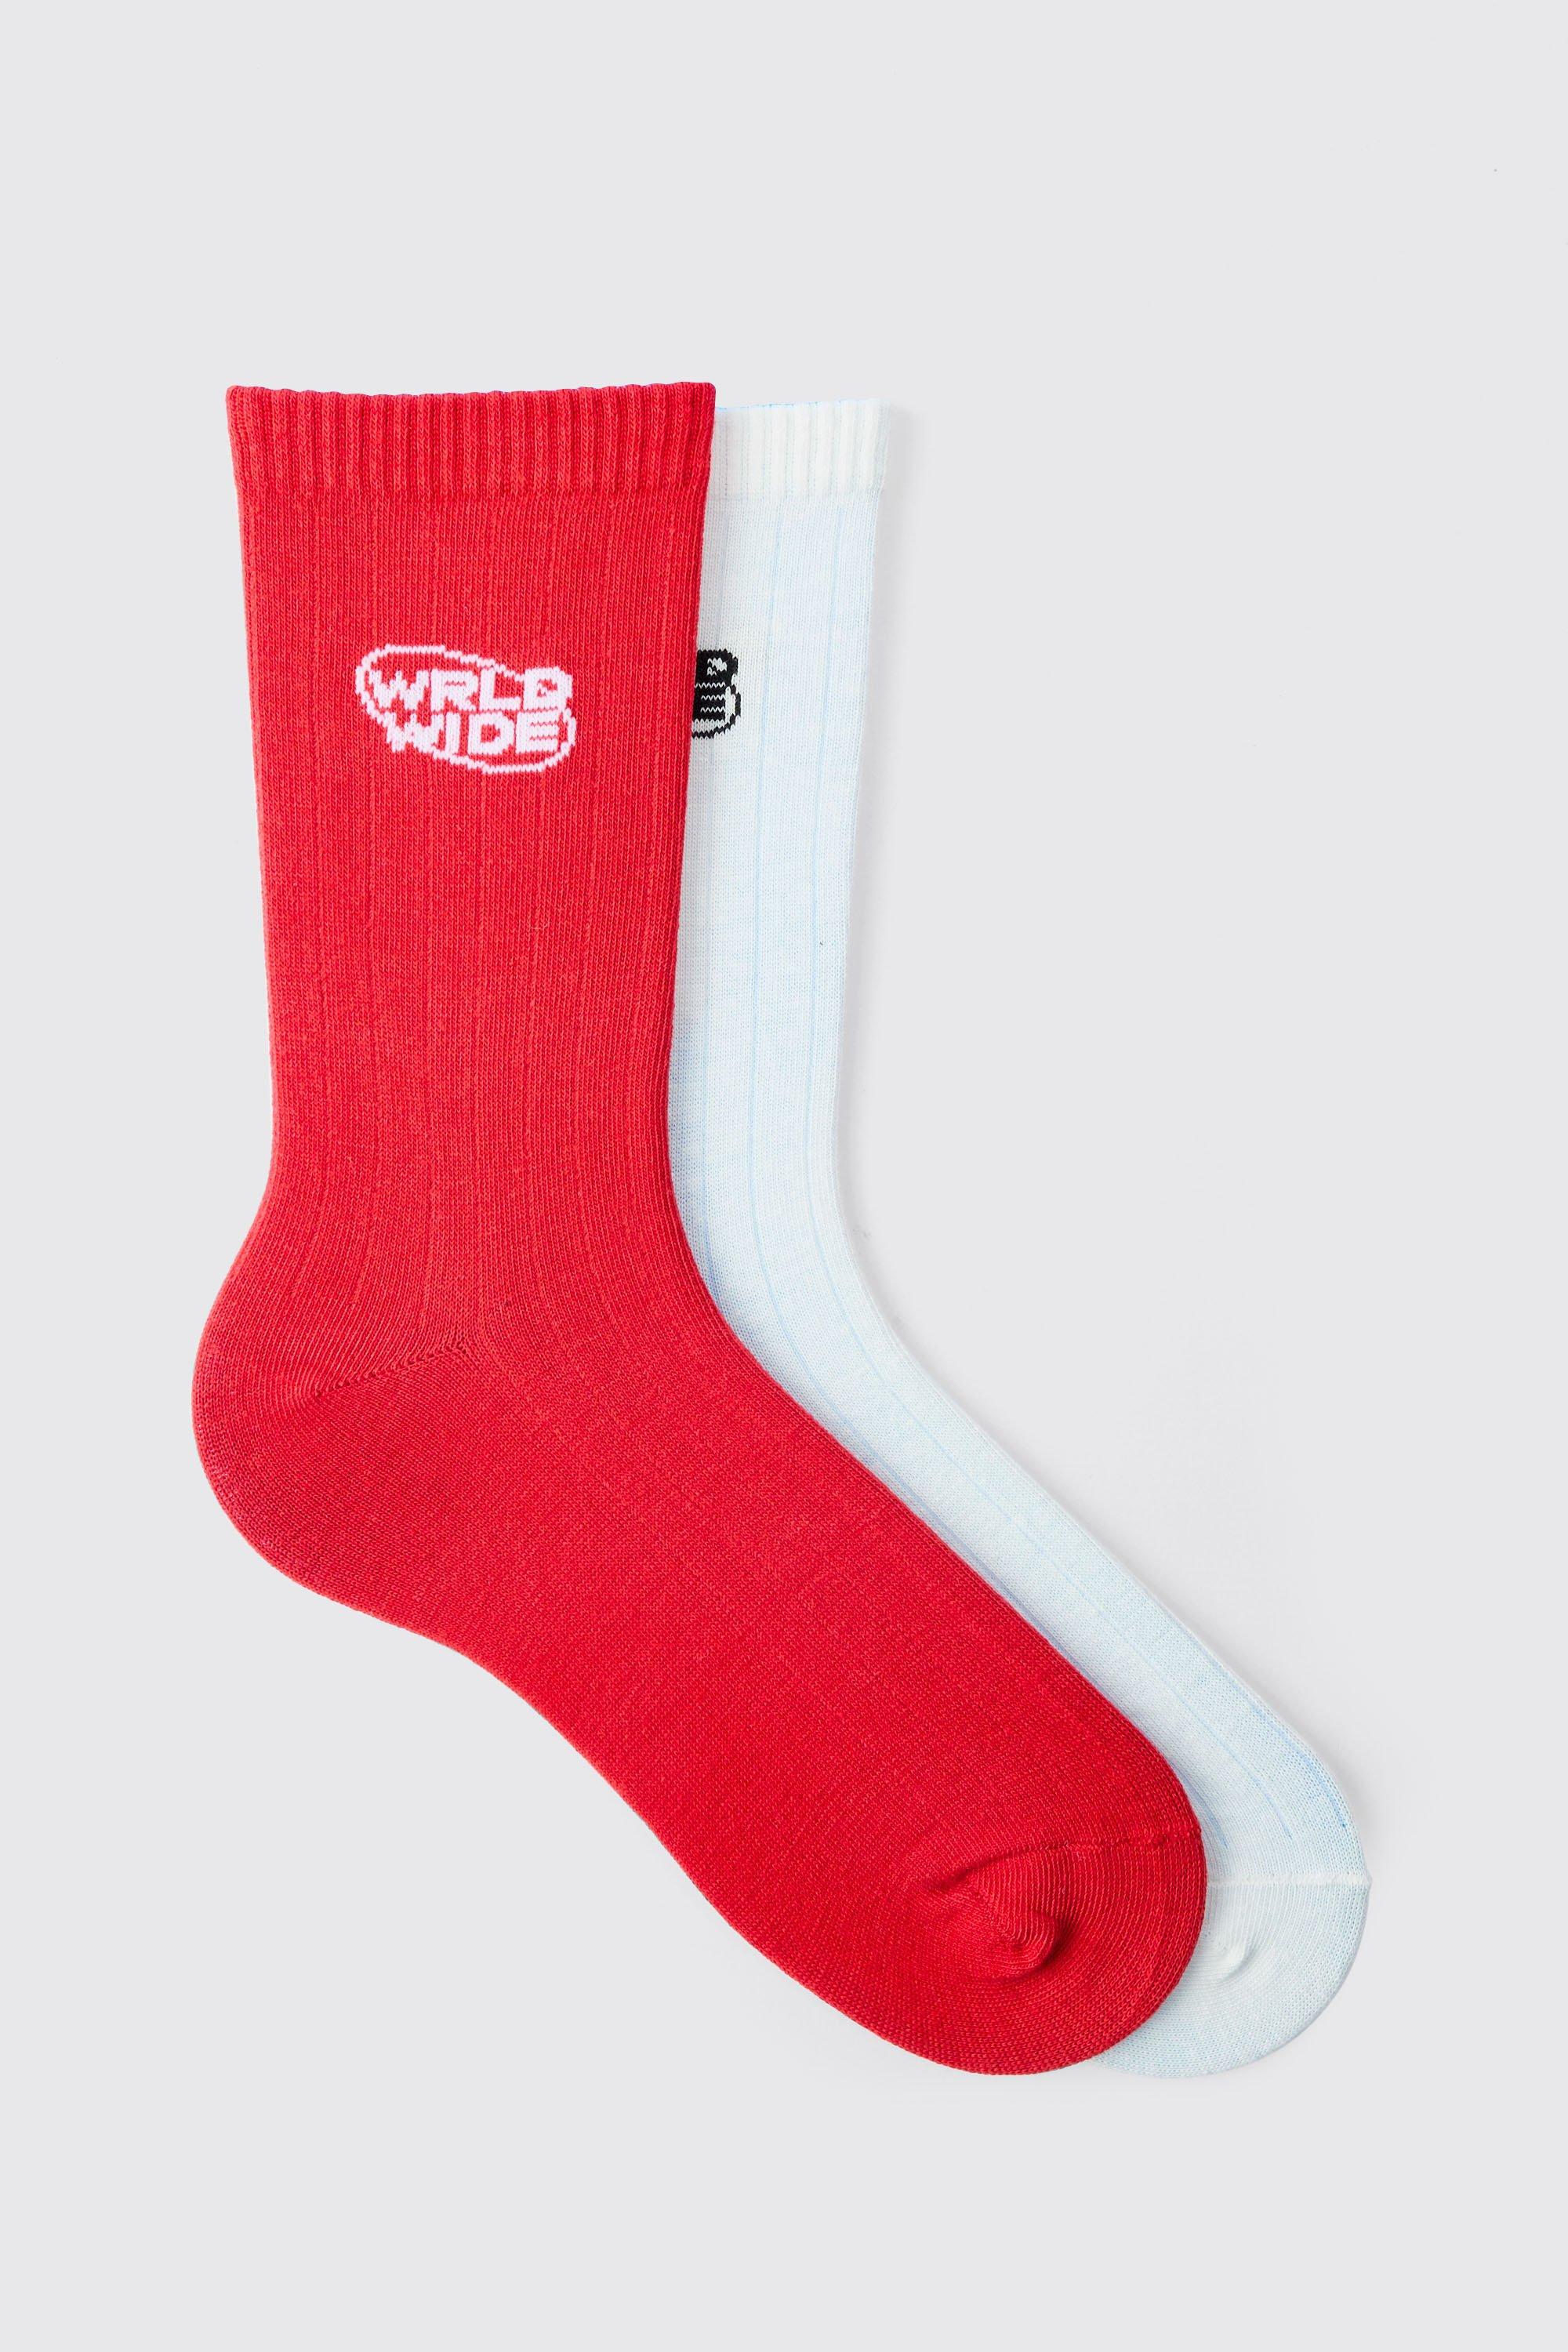 men's 2 pack worldwide intarsia socks - multi - one size, multi